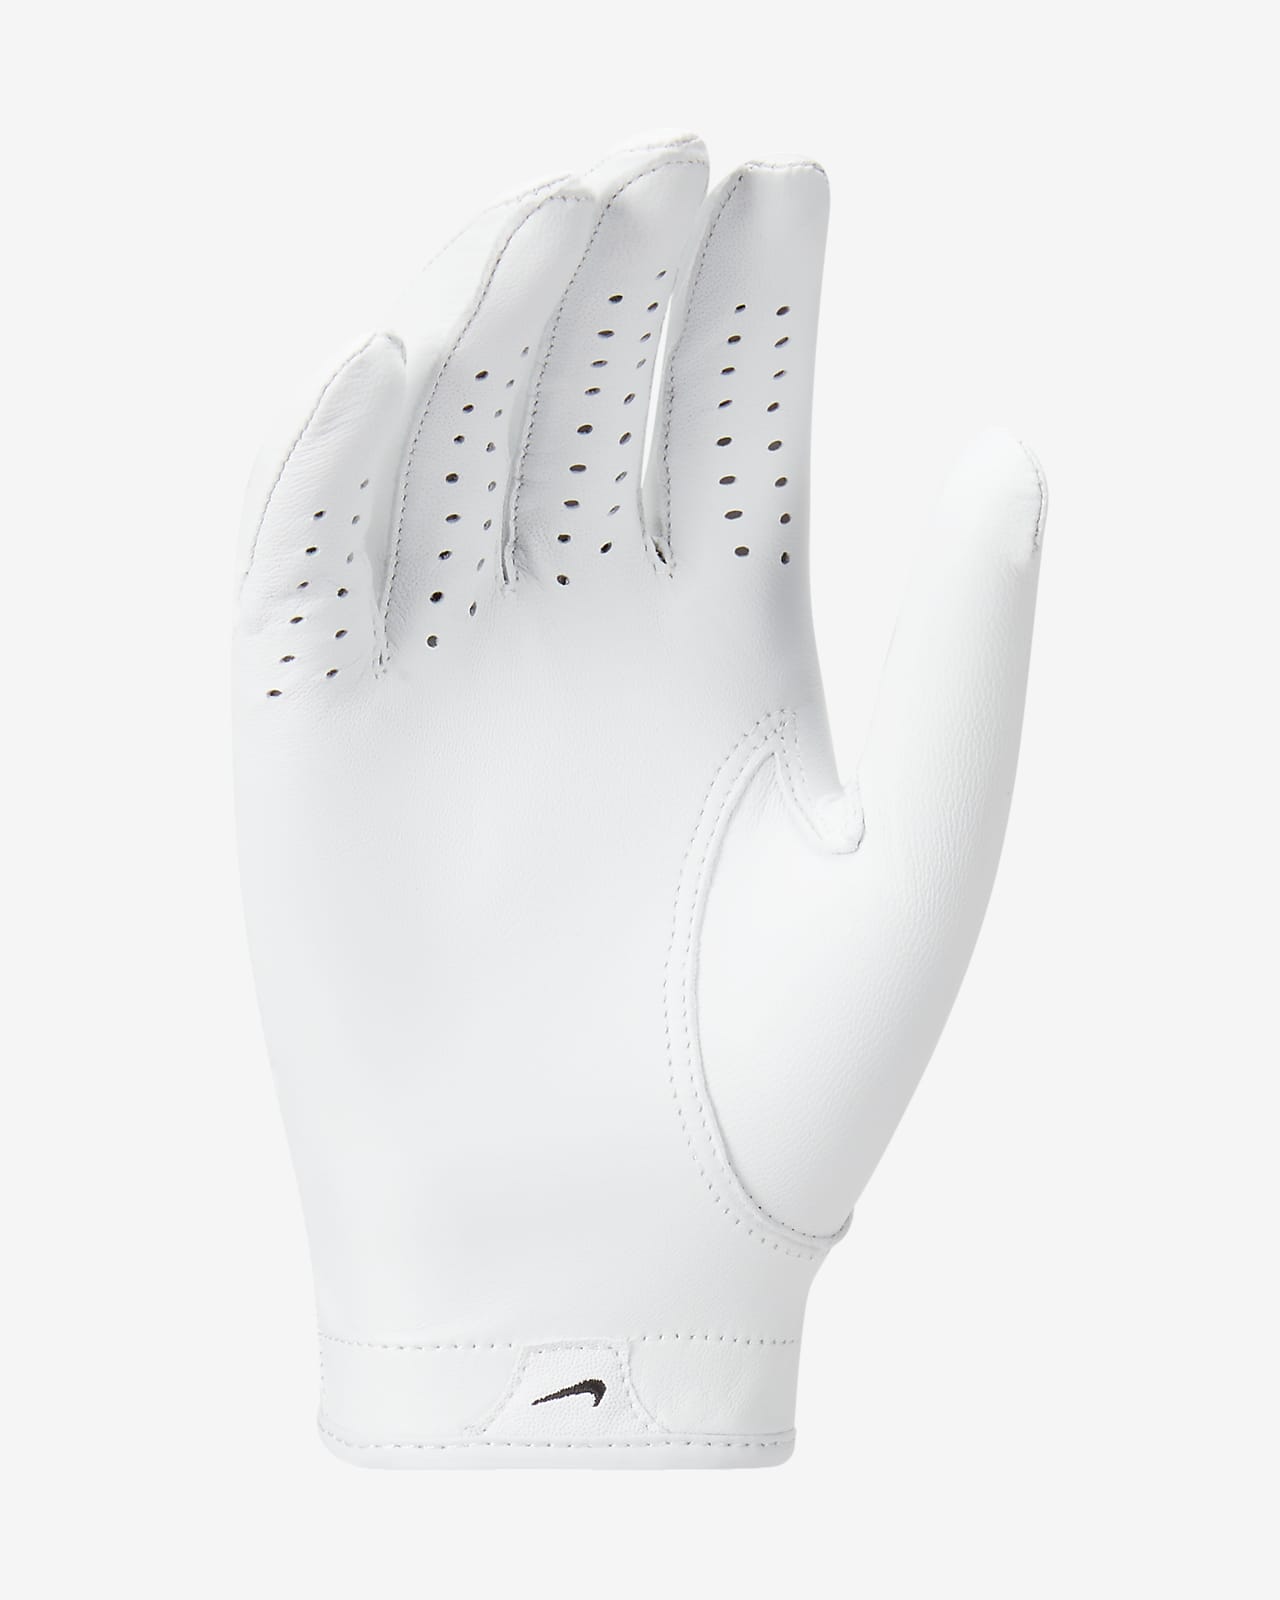 Nike Tour Classic 4 Women's Golf Glove (Right Hand). Nike.com